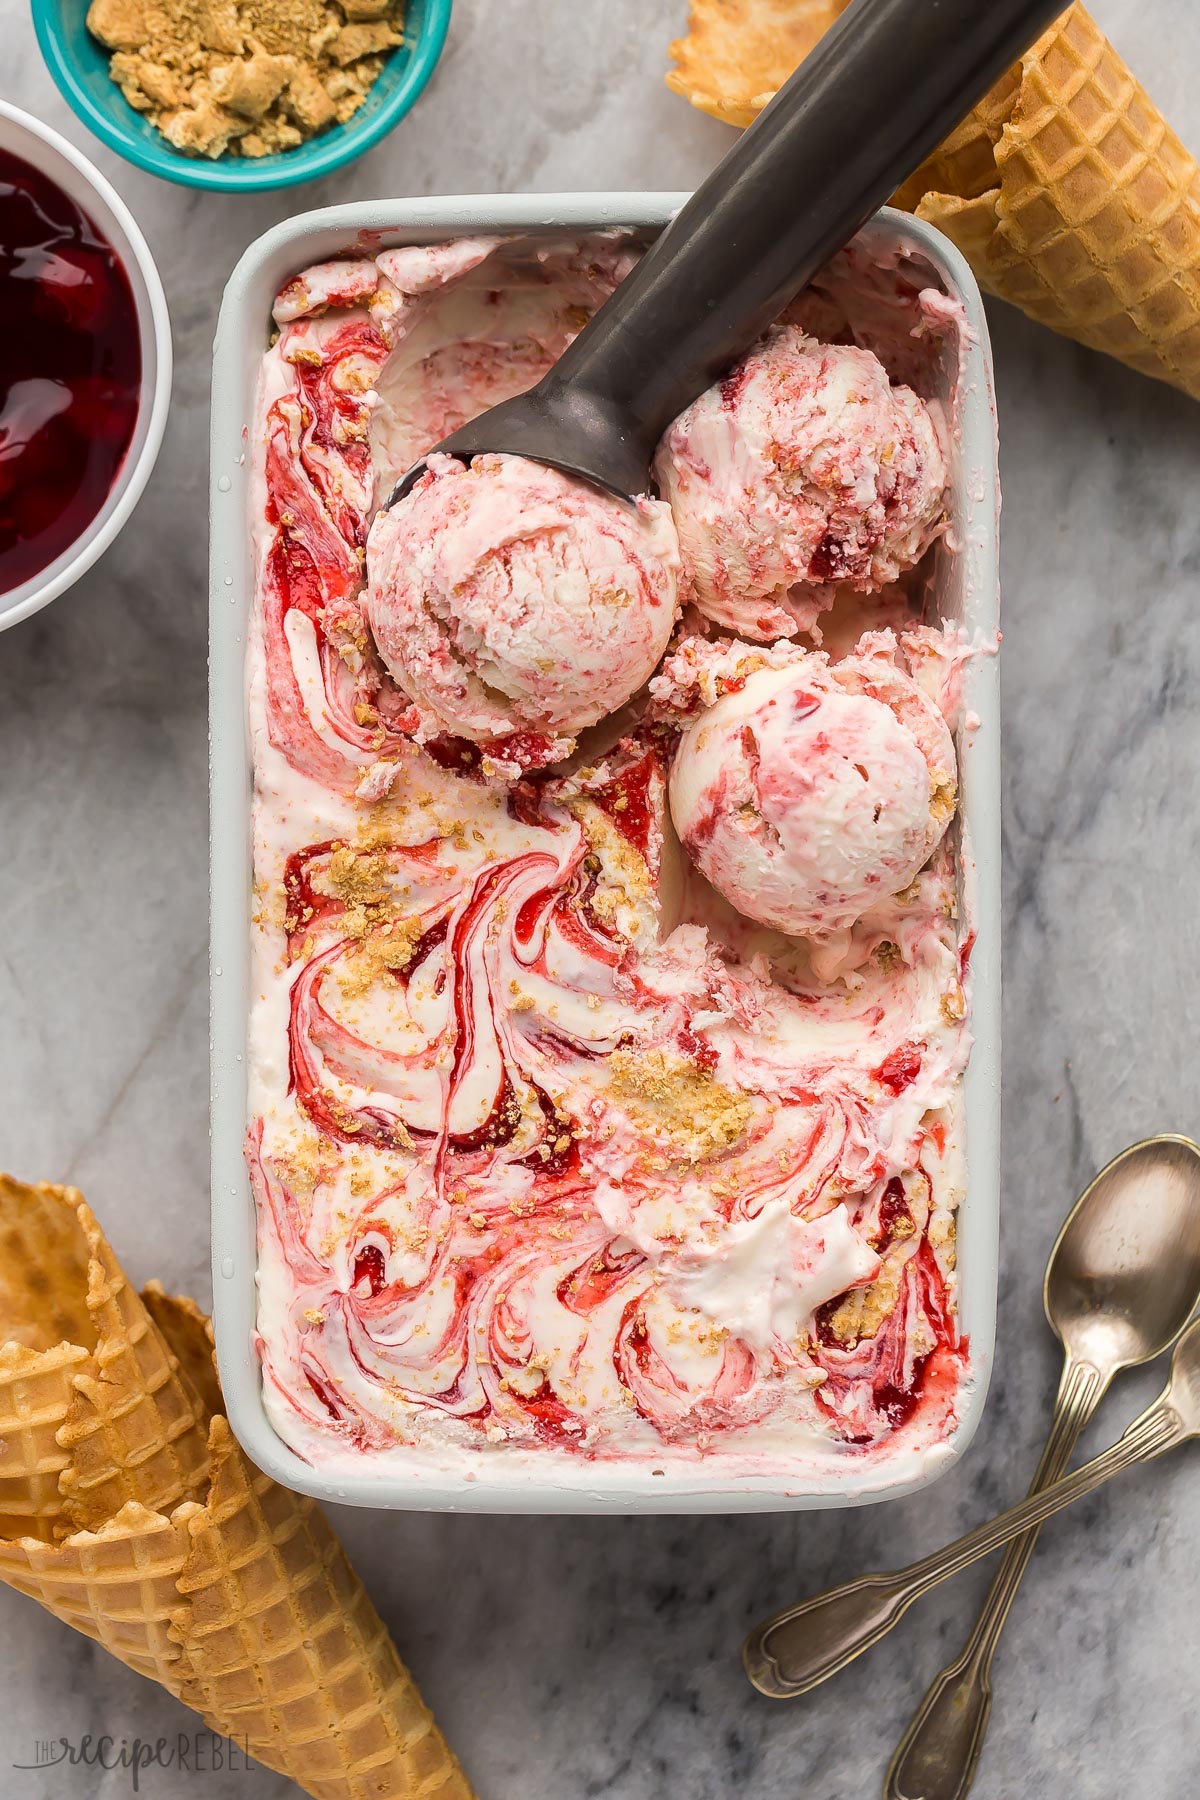 https://www.thereciperebel.com/wp-content/uploads/2015/08/no-churn-cherry-cheesecake-ice-cream-www.thereciperebel.com-1200-25-of-44.jpg